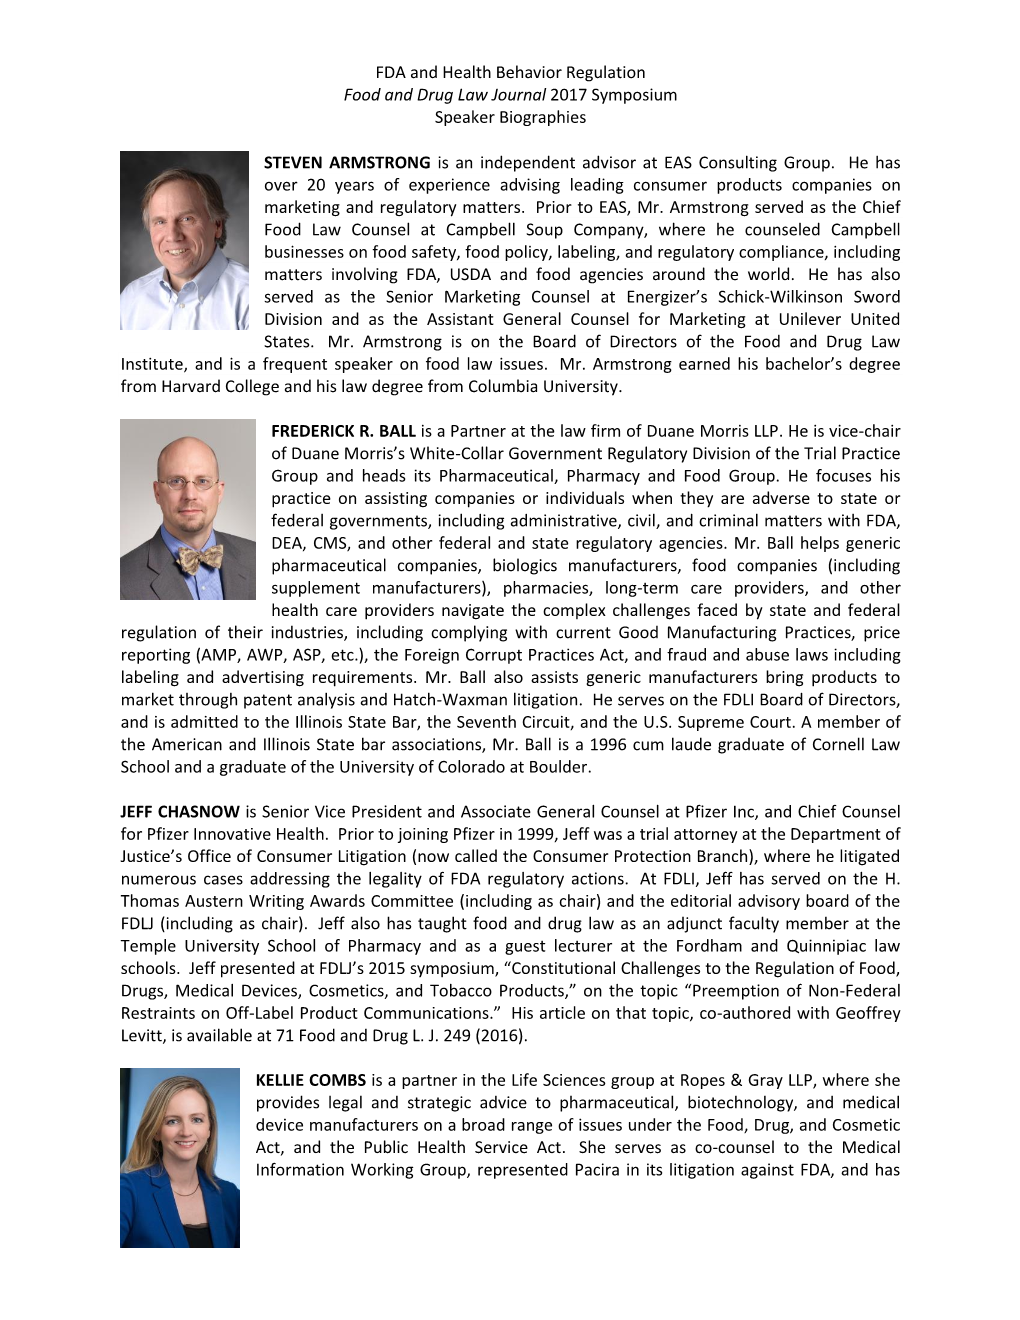 FDA and Health Behavior Regulation Food and Drug Law Journal 2017 Symposium Speaker Biographies